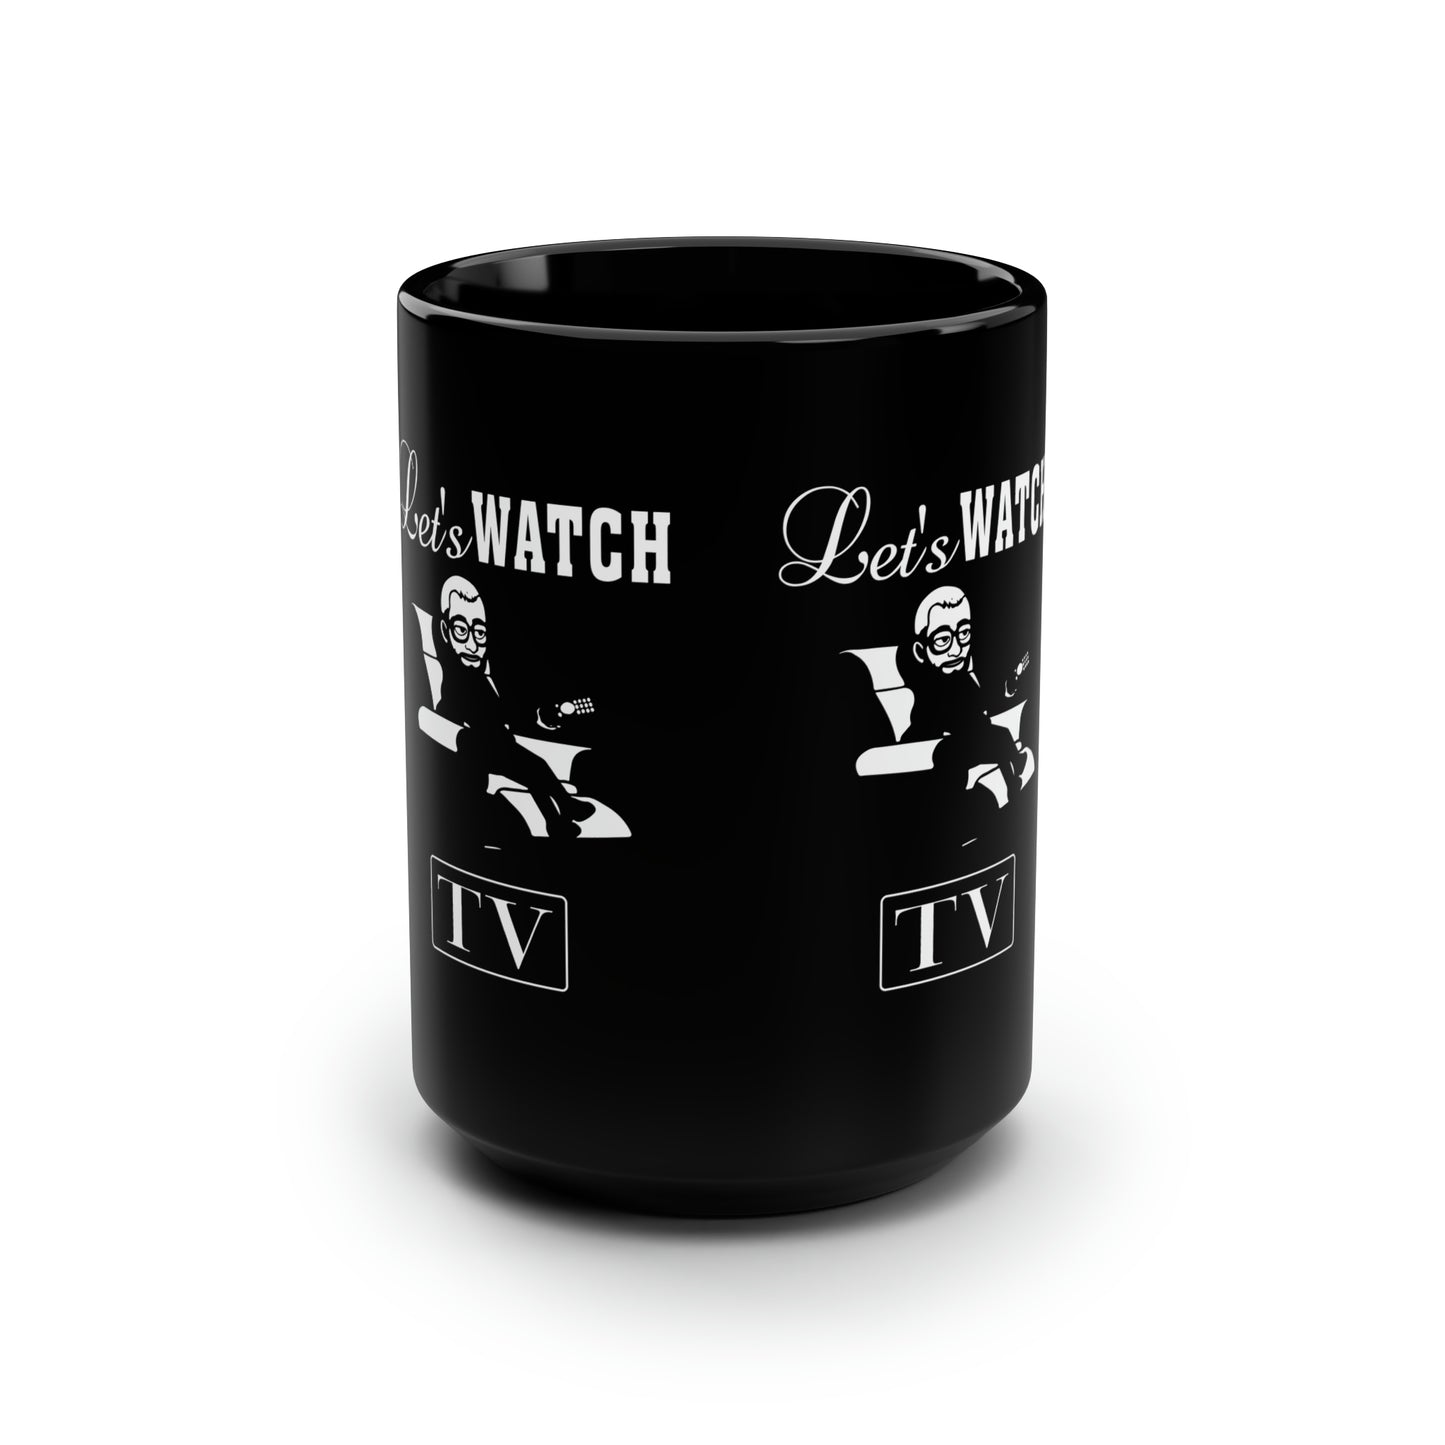 Jay Watch Let's Watch TV - Black Mug, 15oz